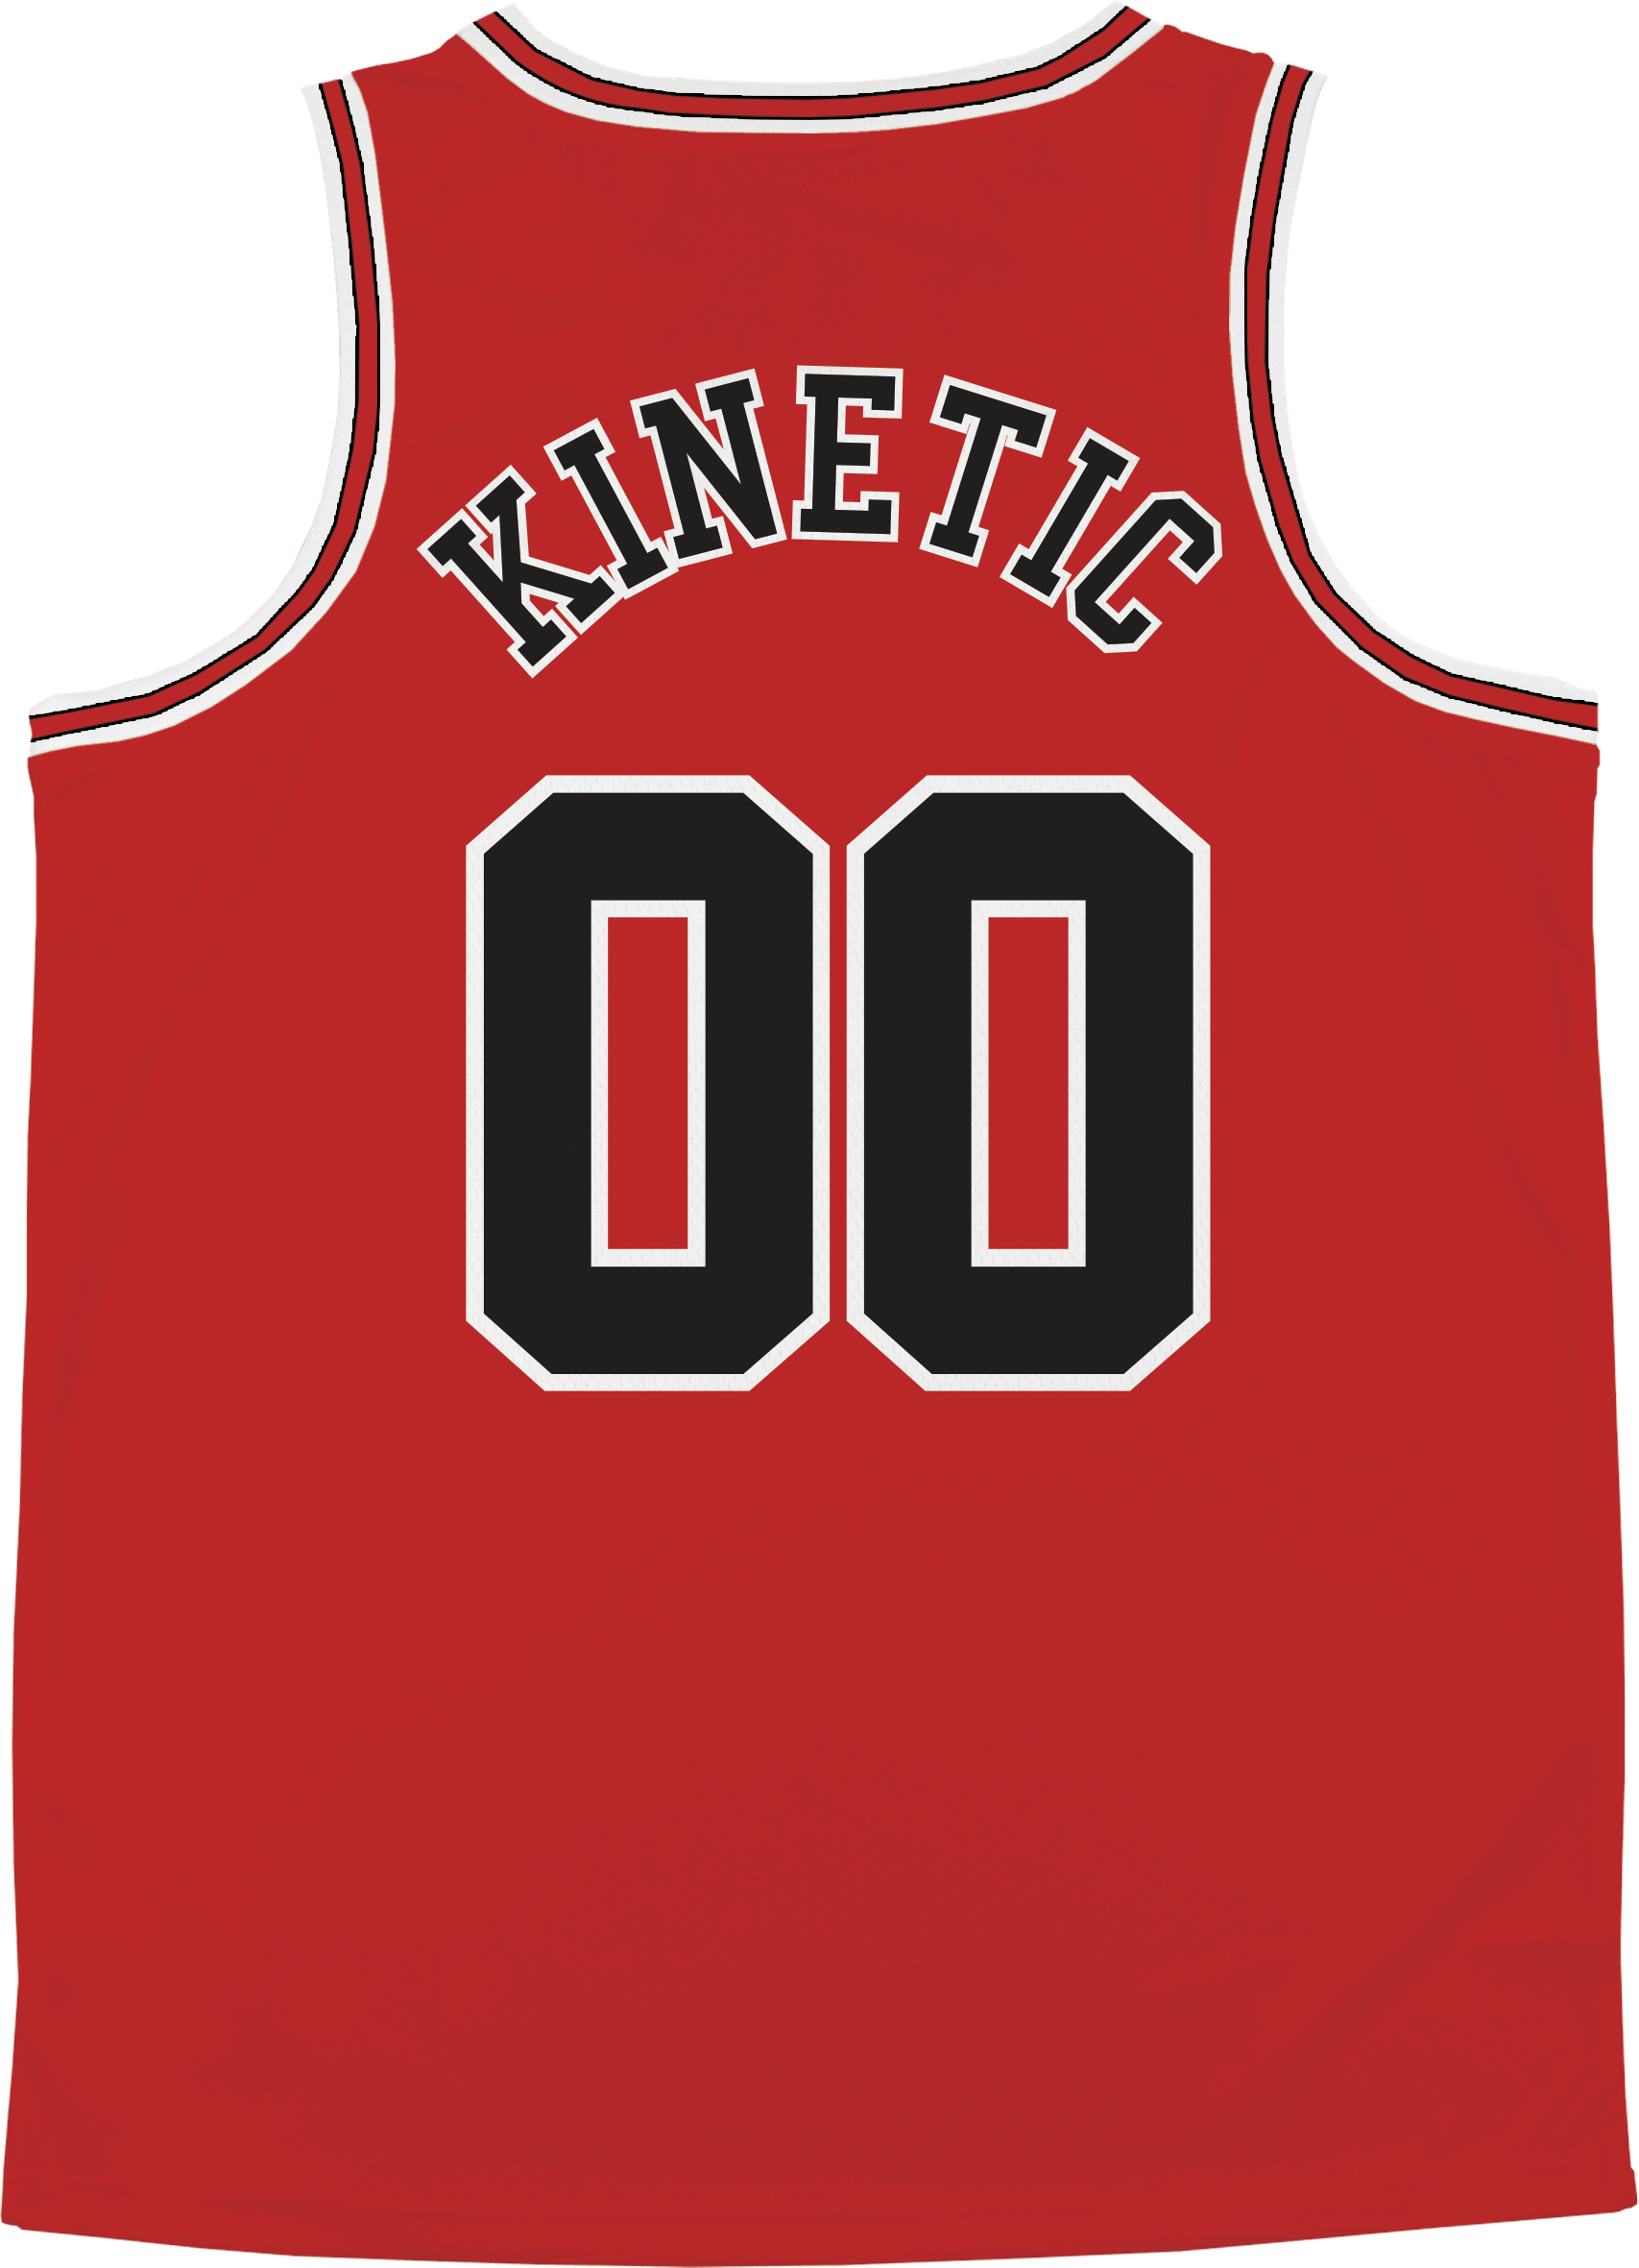 Zeta Beta Tau - Big Red Basketball Jersey - Kinetic Society